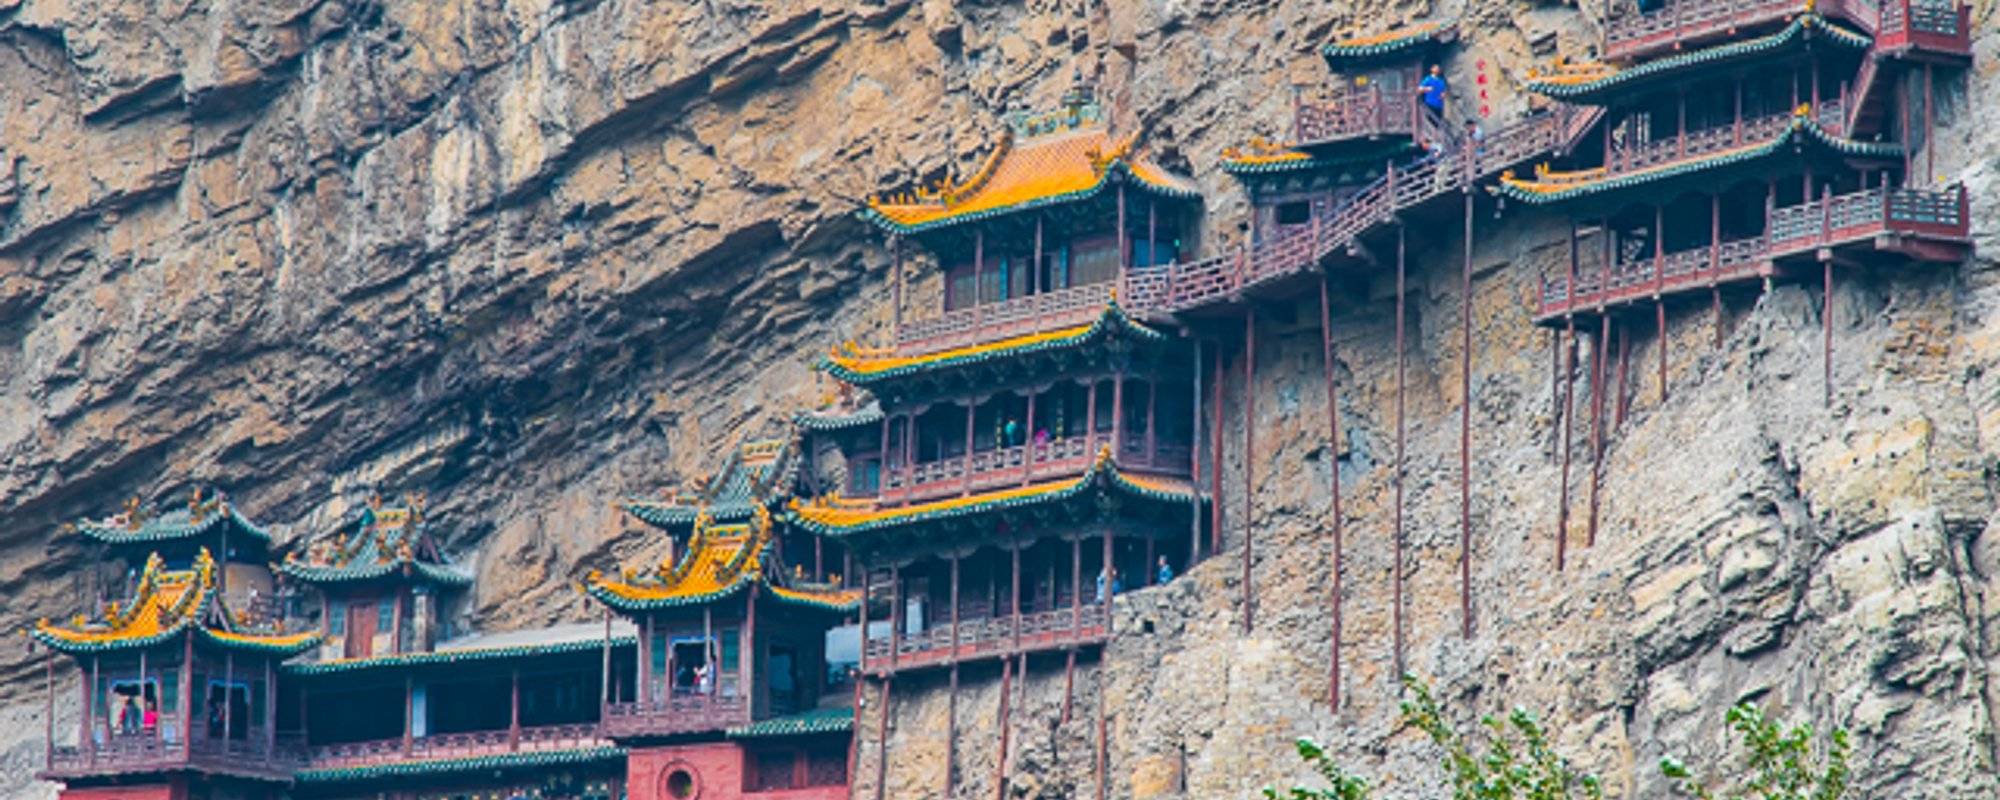 Stop #2, Datong's Hanging Monastery